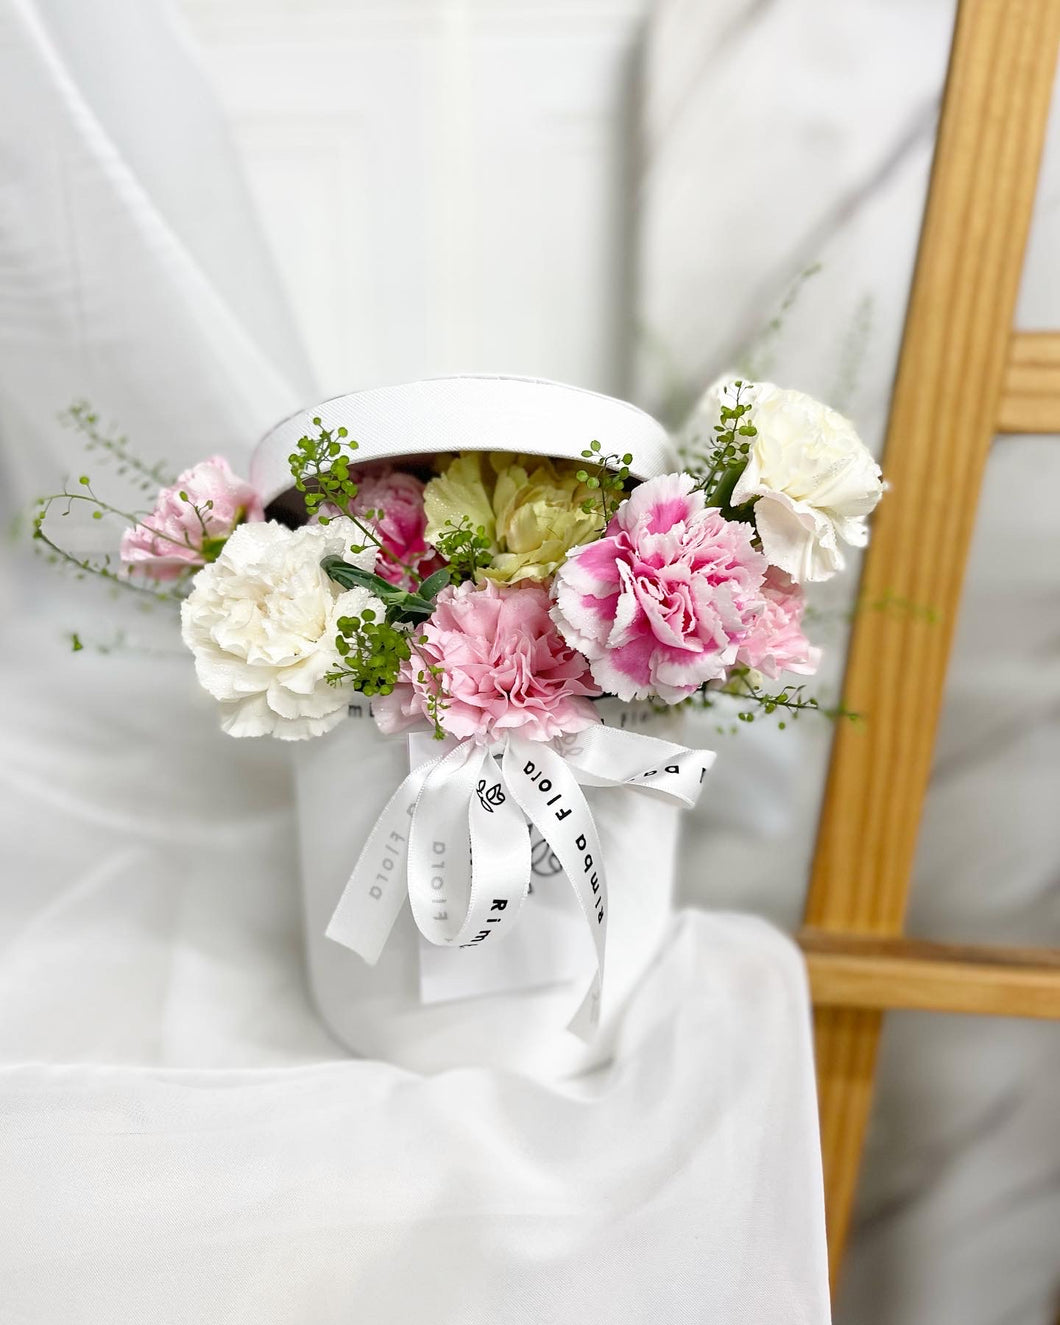 Signature Hatbox Flowers To You (Fresh Pretty Pastel Design)